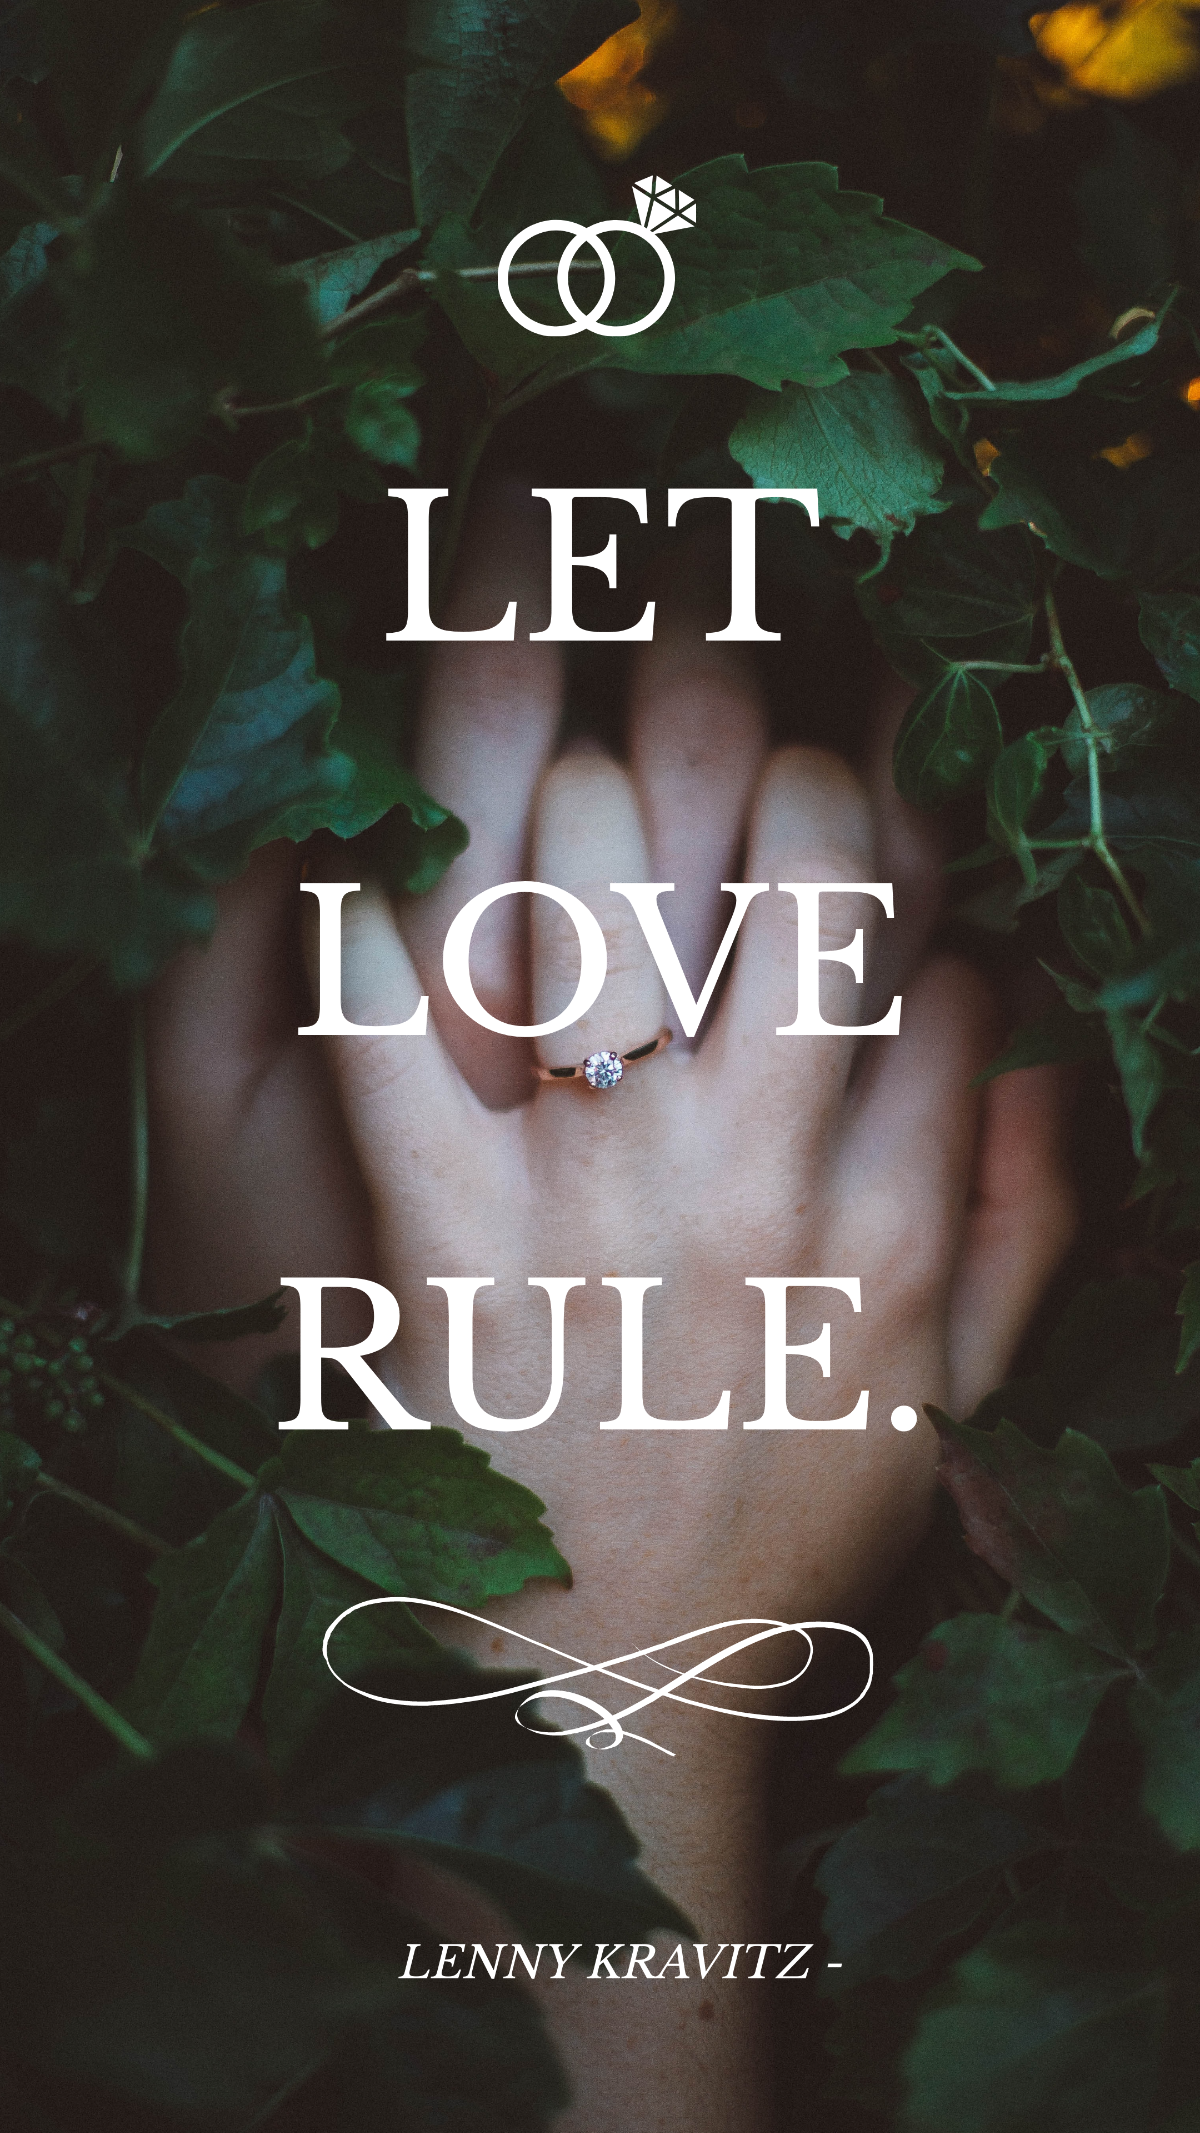 Lenny Kravitz - Let love rule.